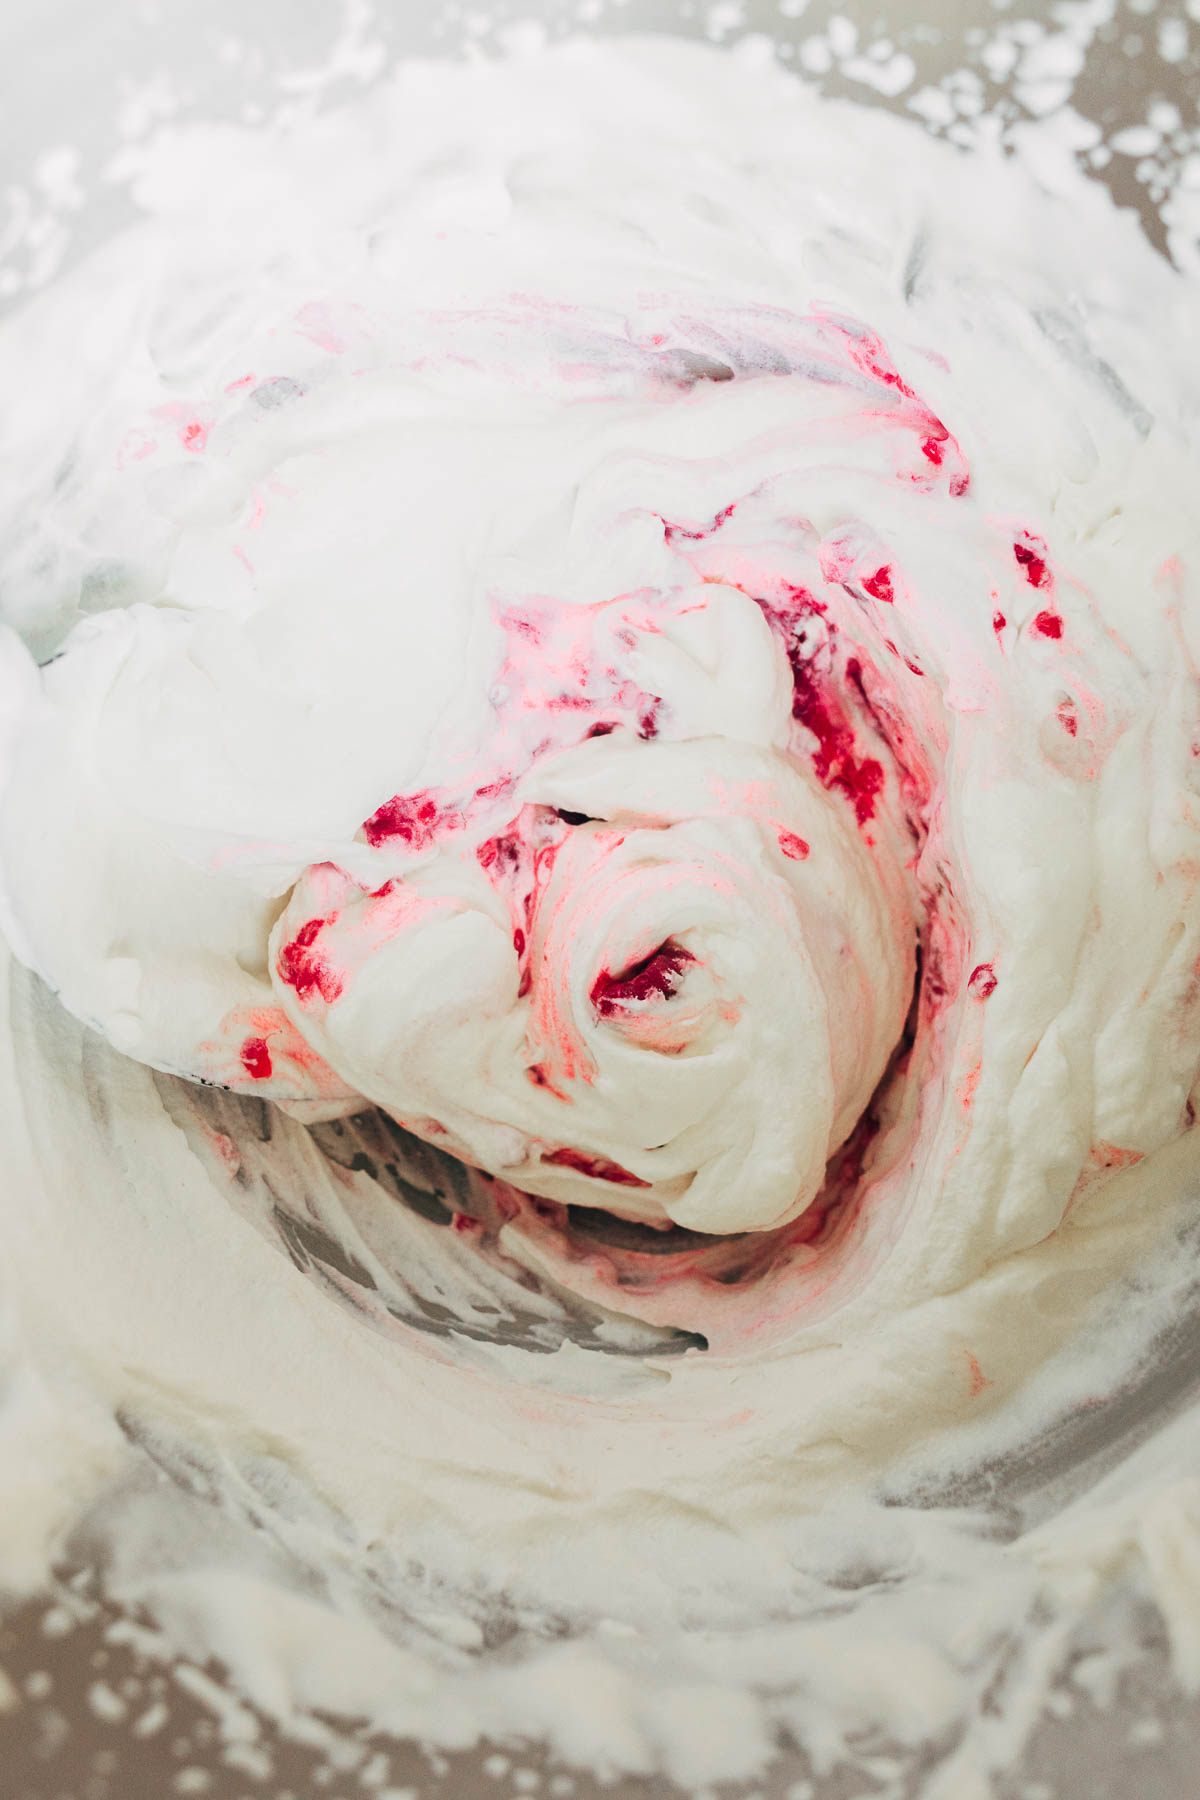 Raspberries swirled into whipped cream.